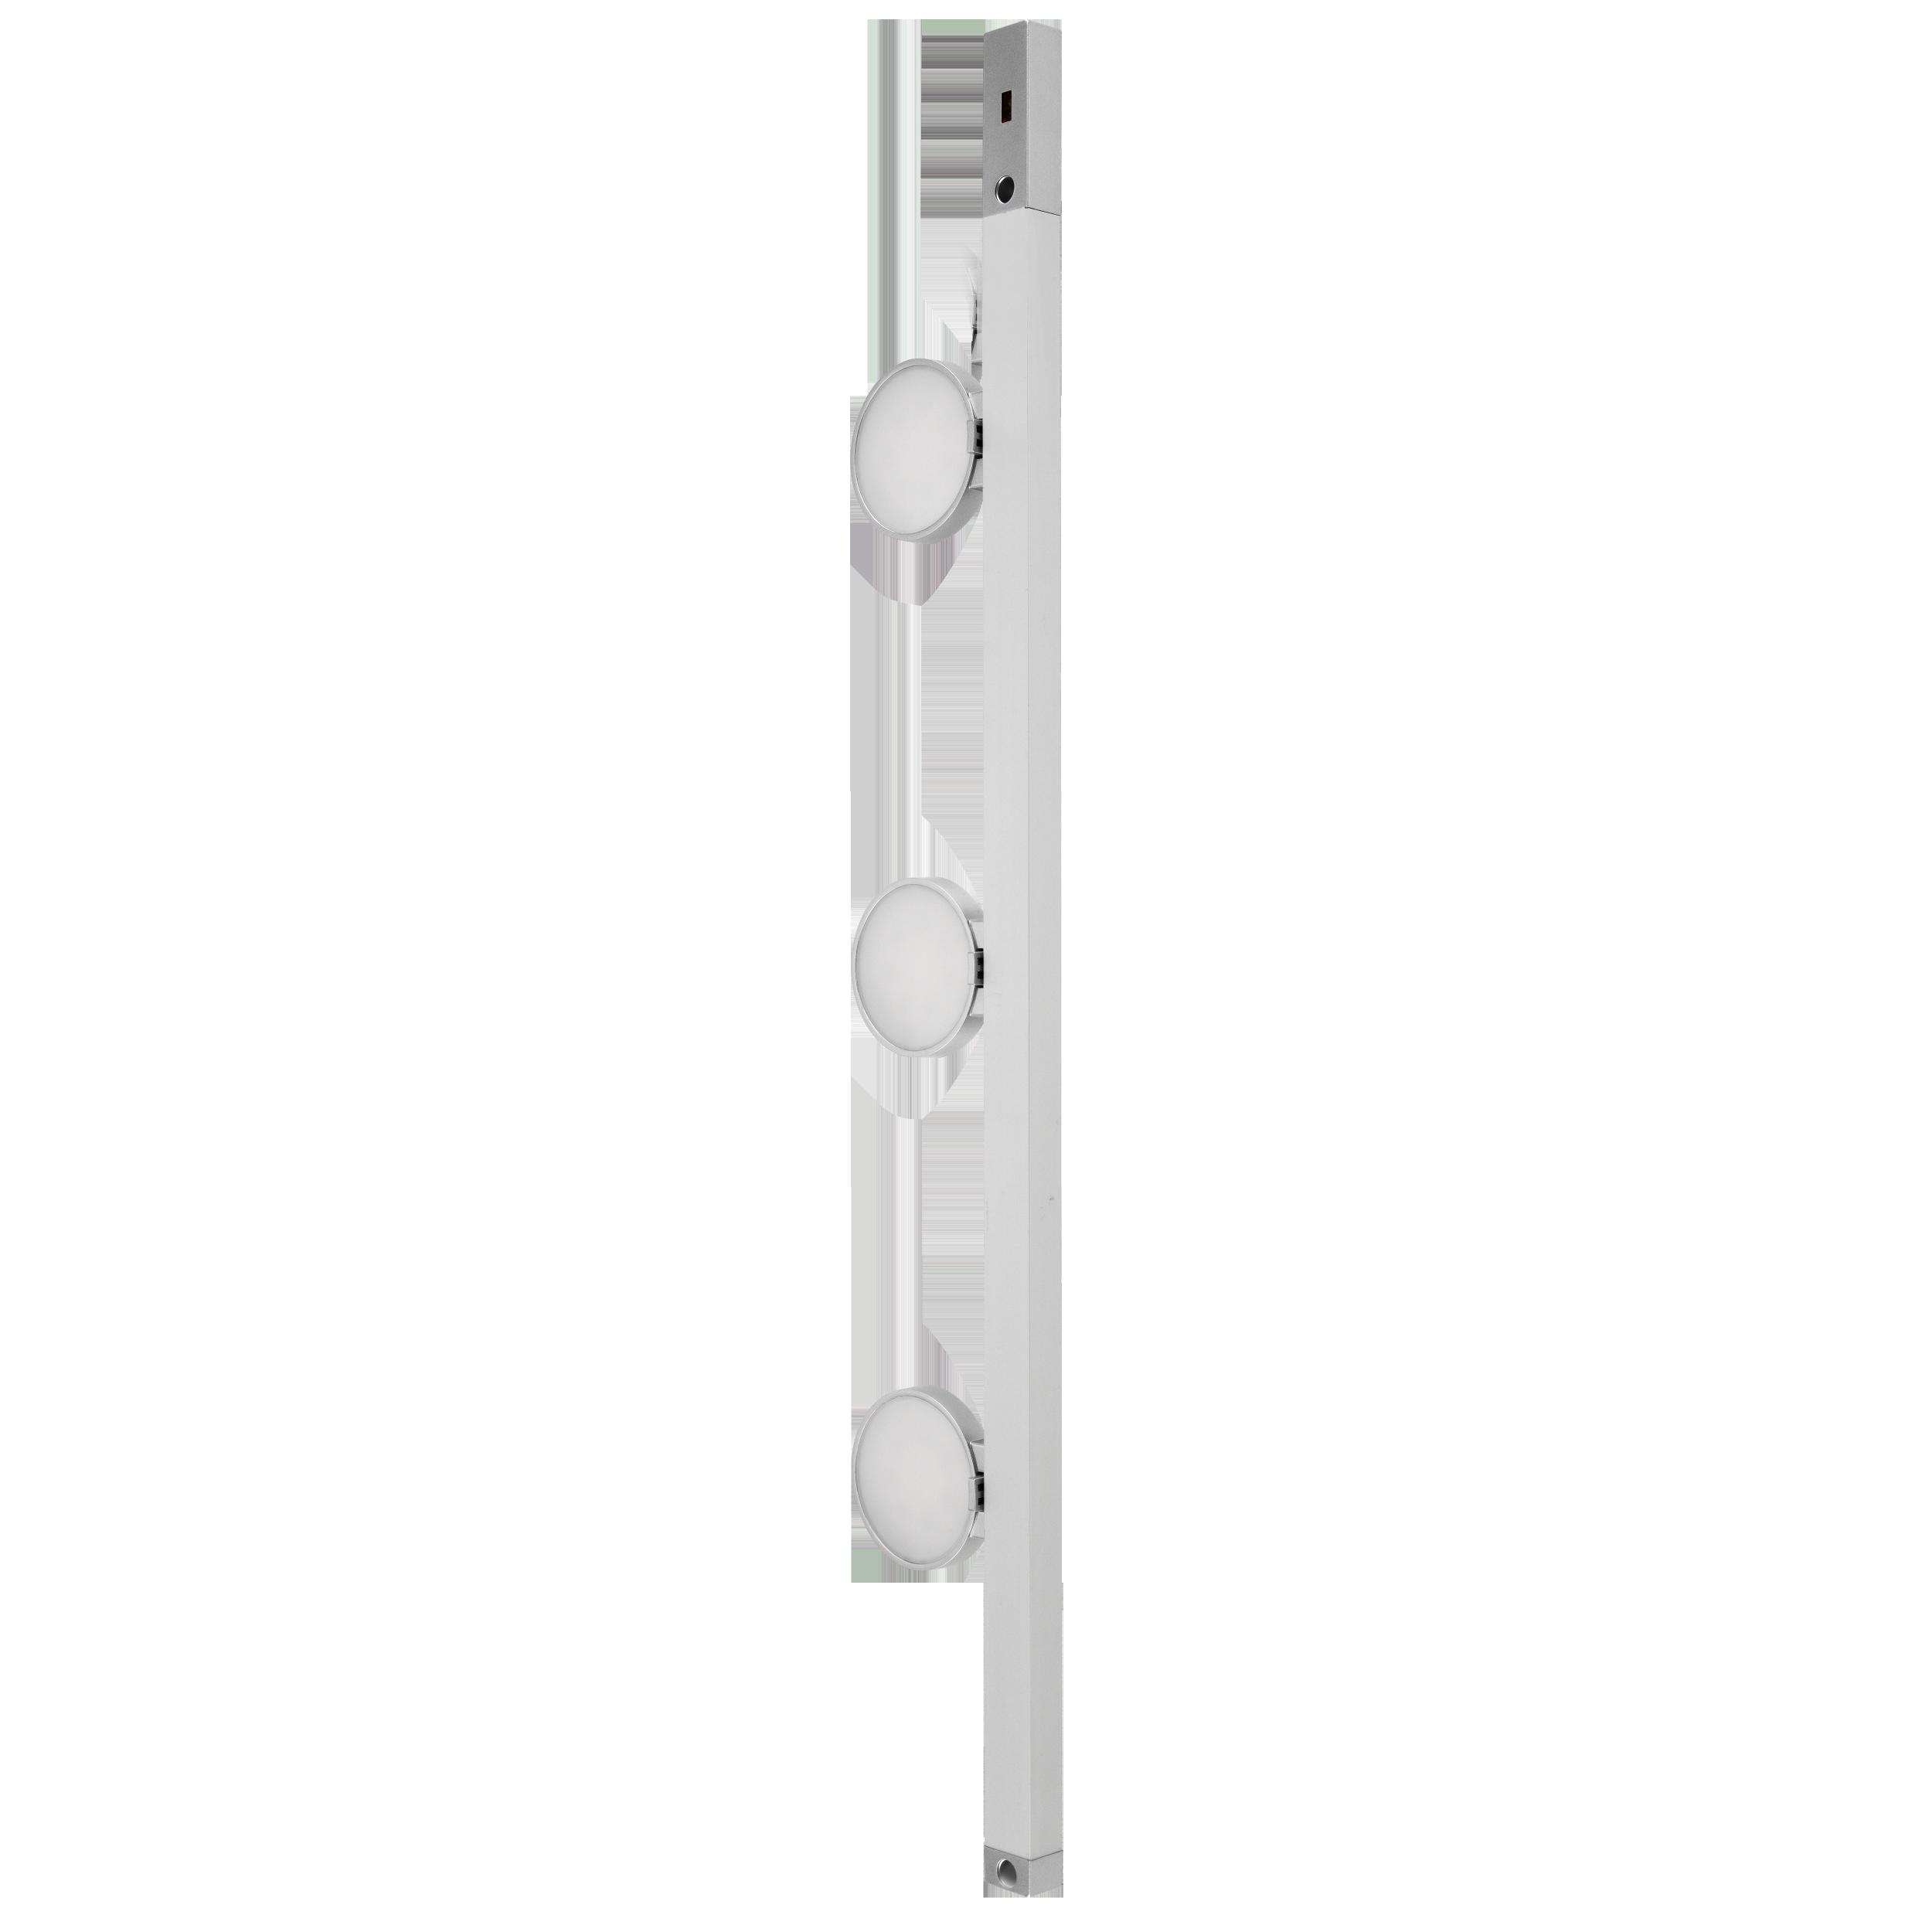 REV LED Unterbauleuchte LIGHTRACER 3 mit Sensor, dimmbar 60 cm, 3x3W, Farbe silber